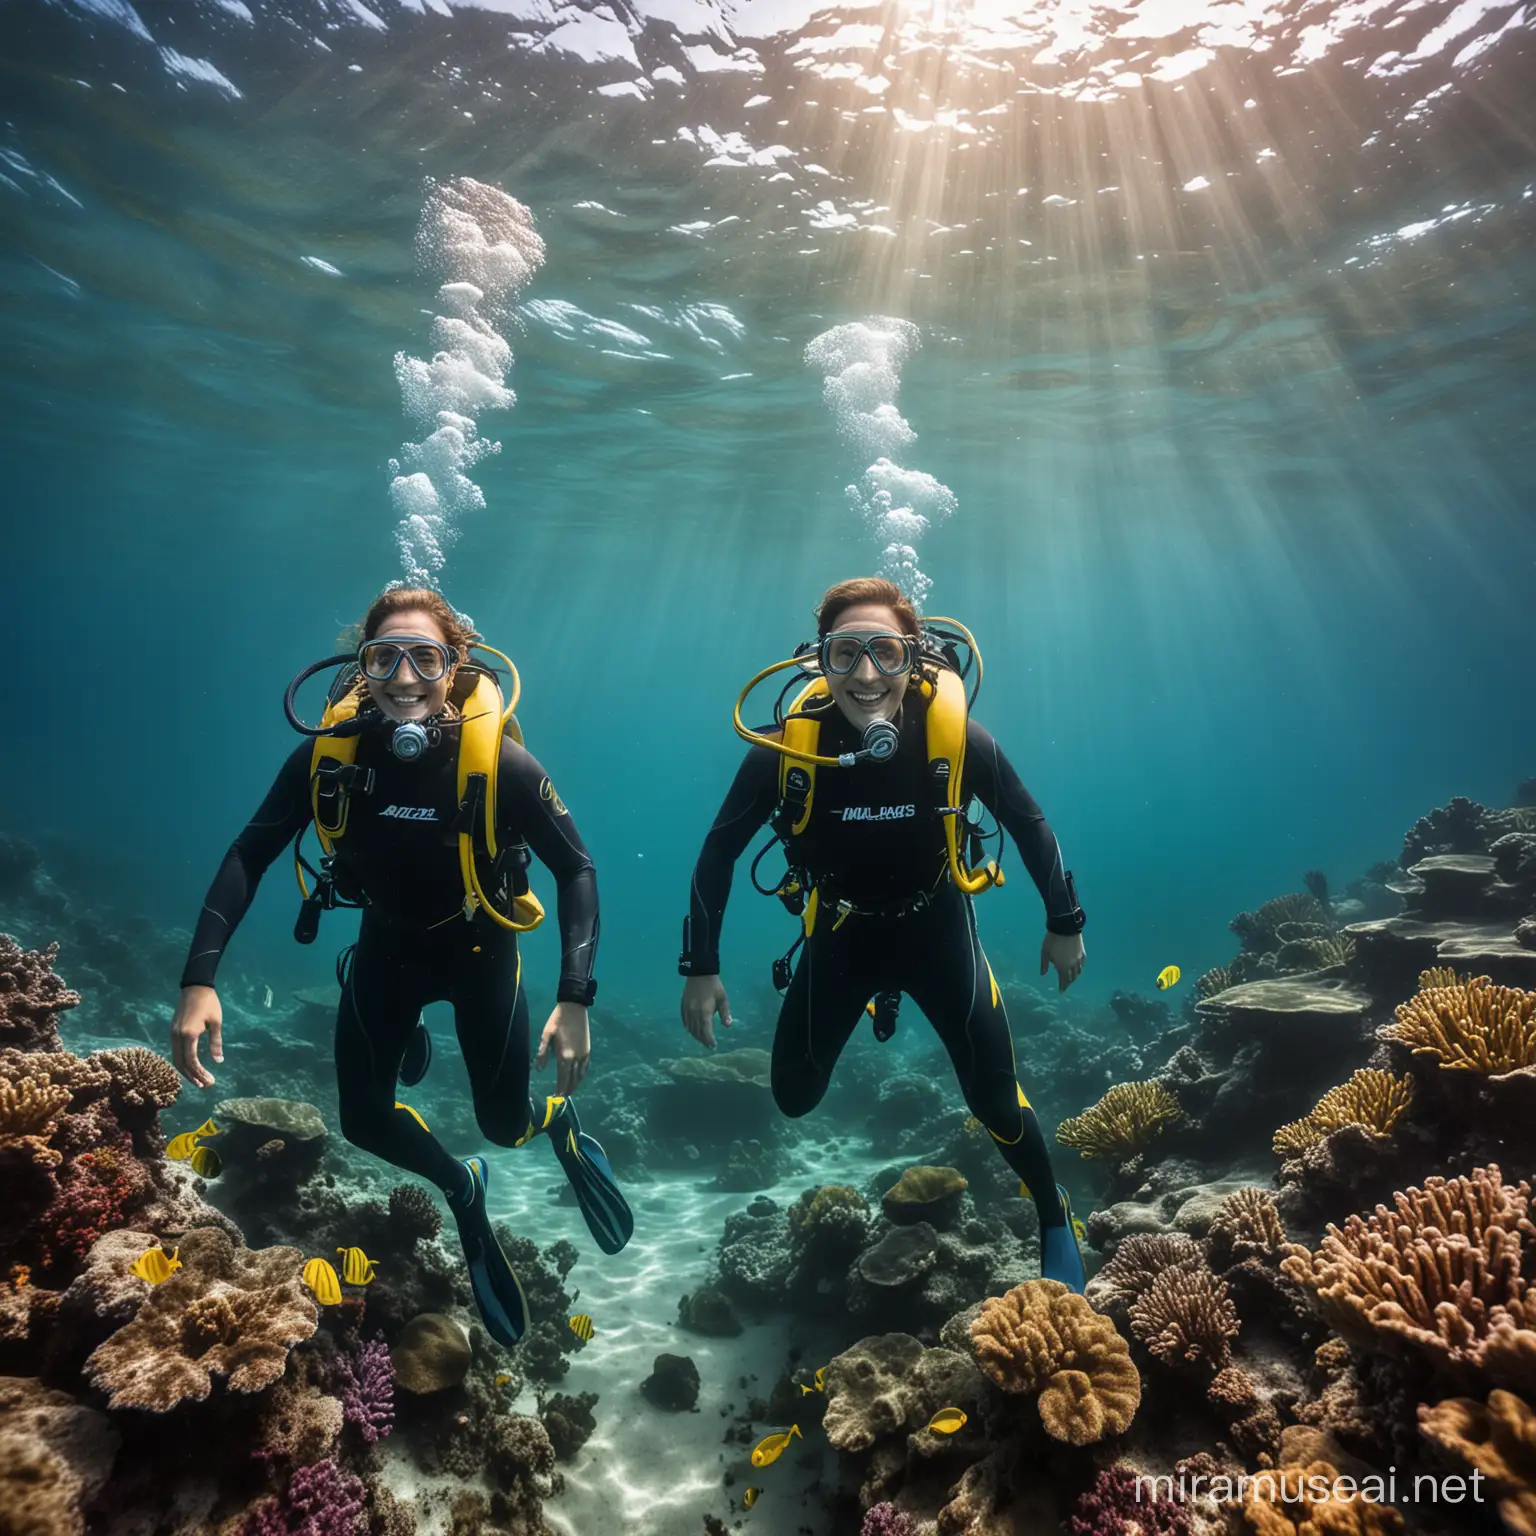 Enthusiastic Scuba Divers Embracing Adventure in Vibrant Underwater Scene